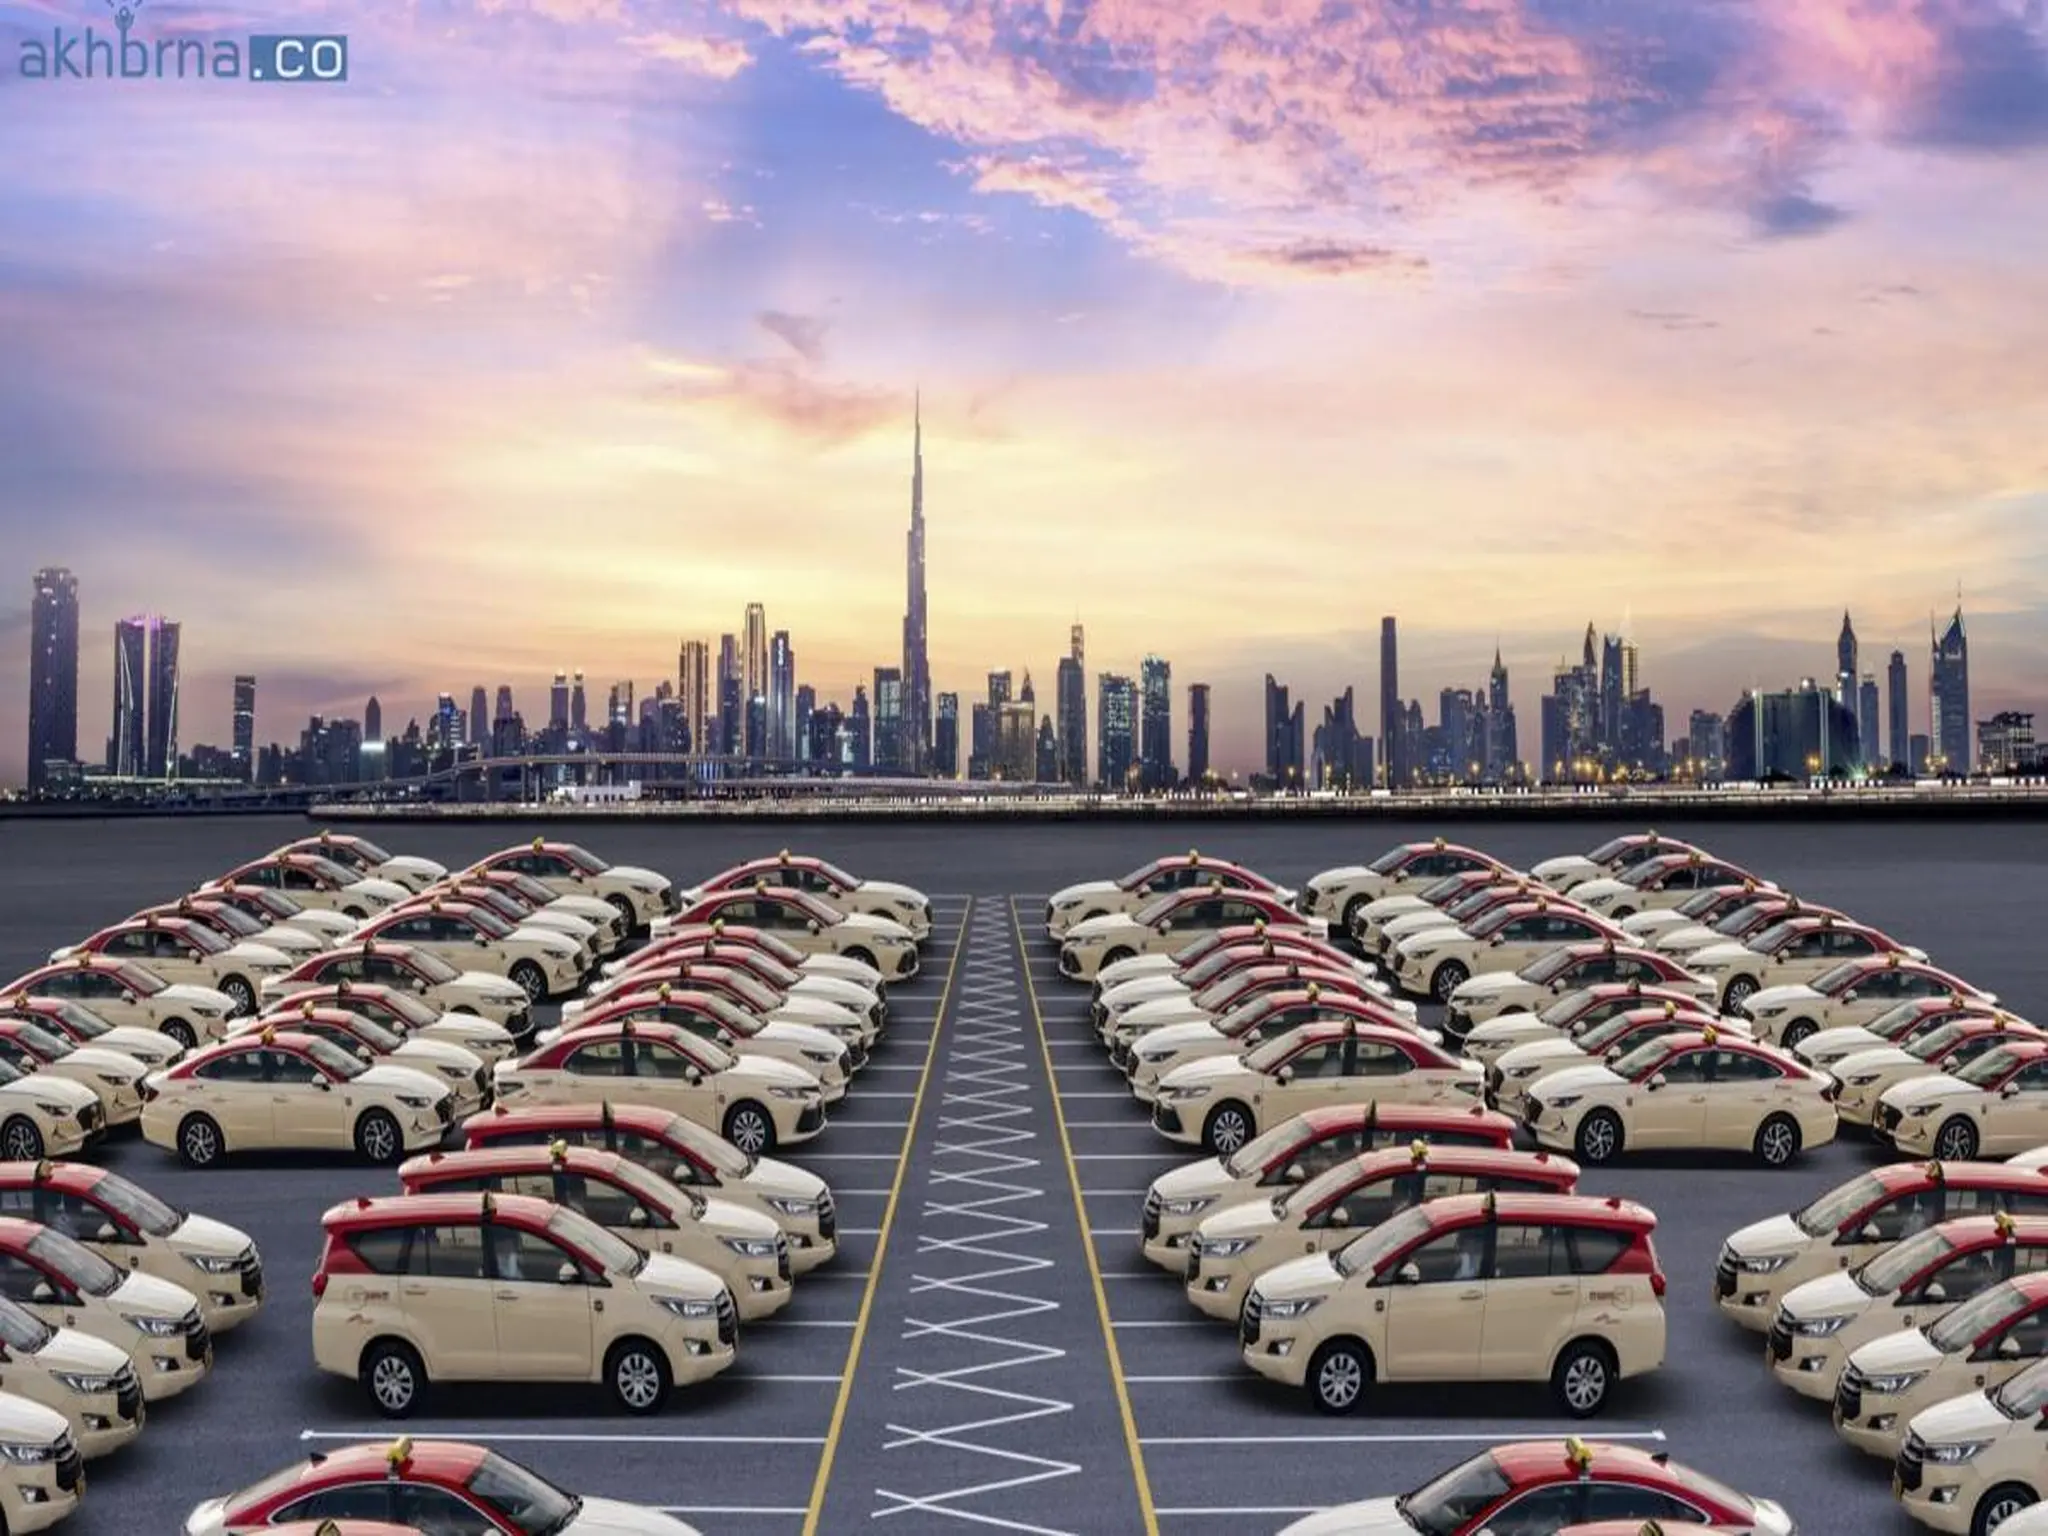 Dubai Taxi Company Announces Share Allocation Date After Record IPO Demand